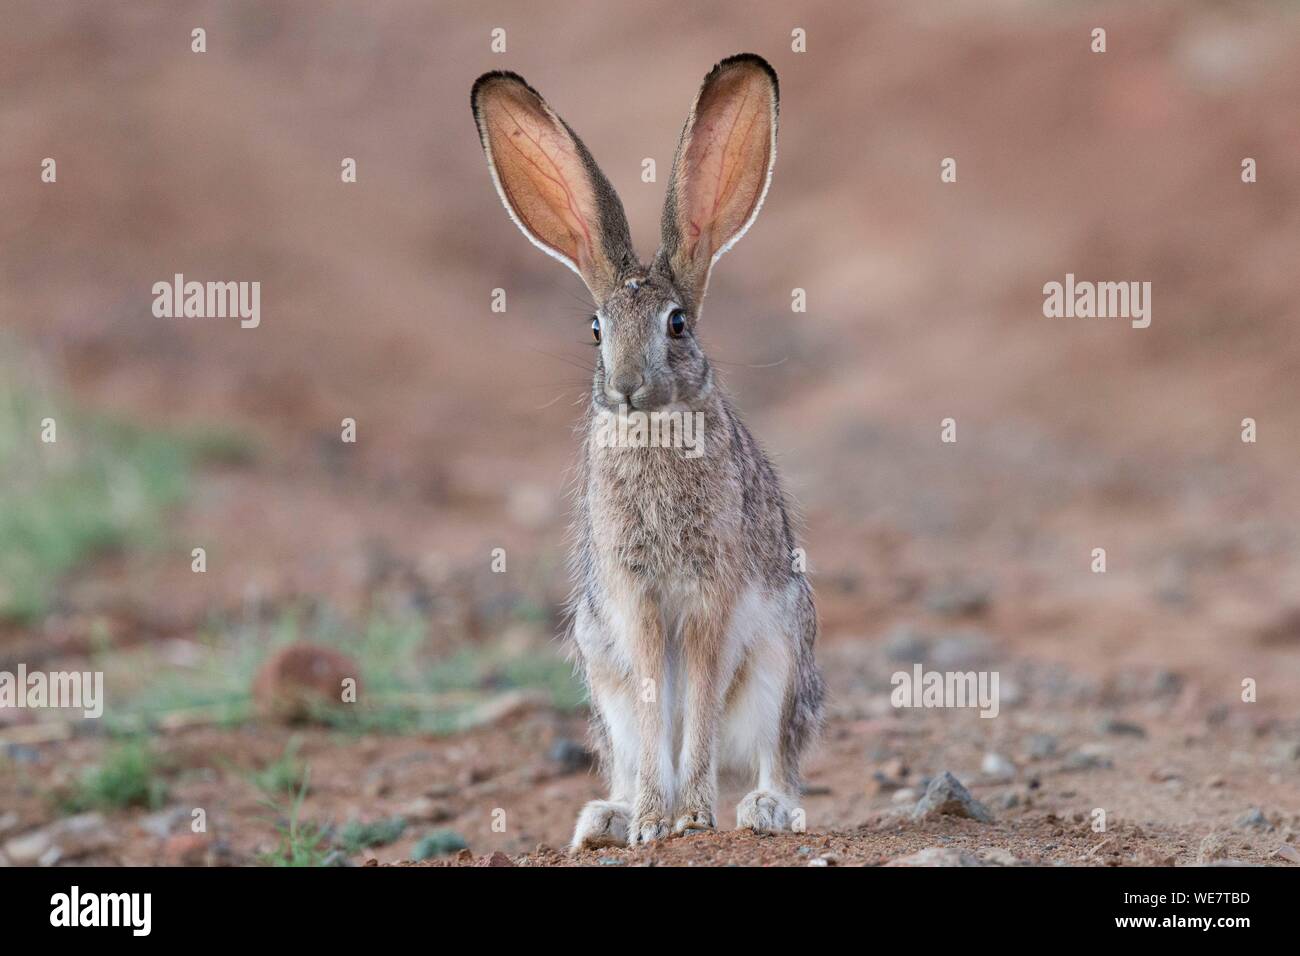 South Africa, Private reserve, Scrub hare (Lepus saxatilis) Stock Photo